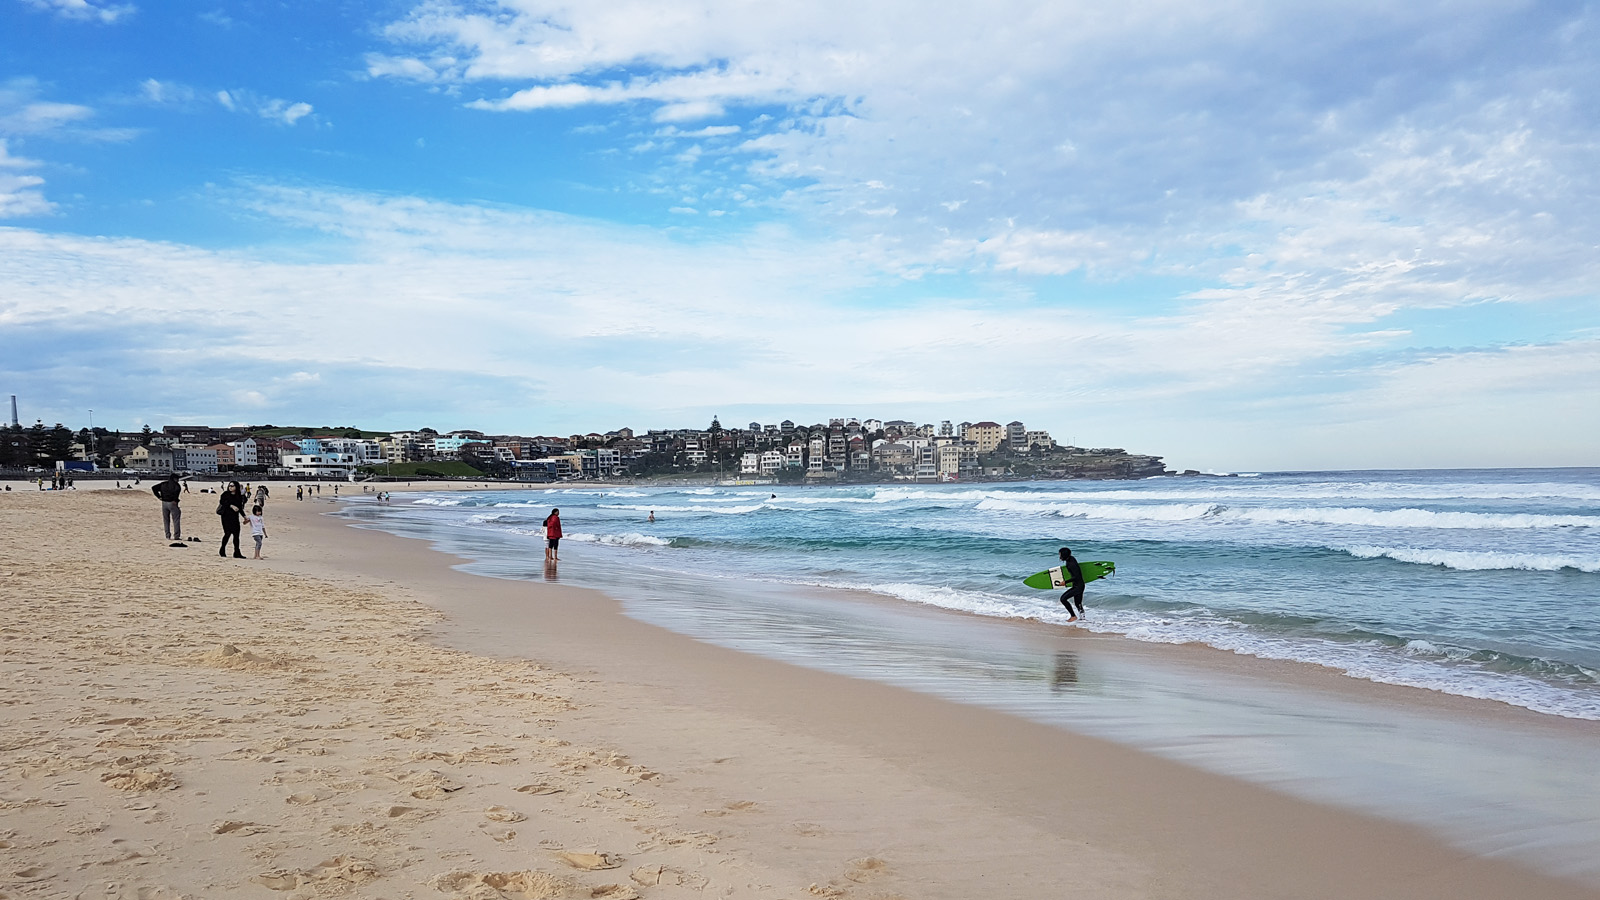 SGMT Australia Sydney_Bondi to Coogee Coastal Walk_33 Bondi Beach Surfer